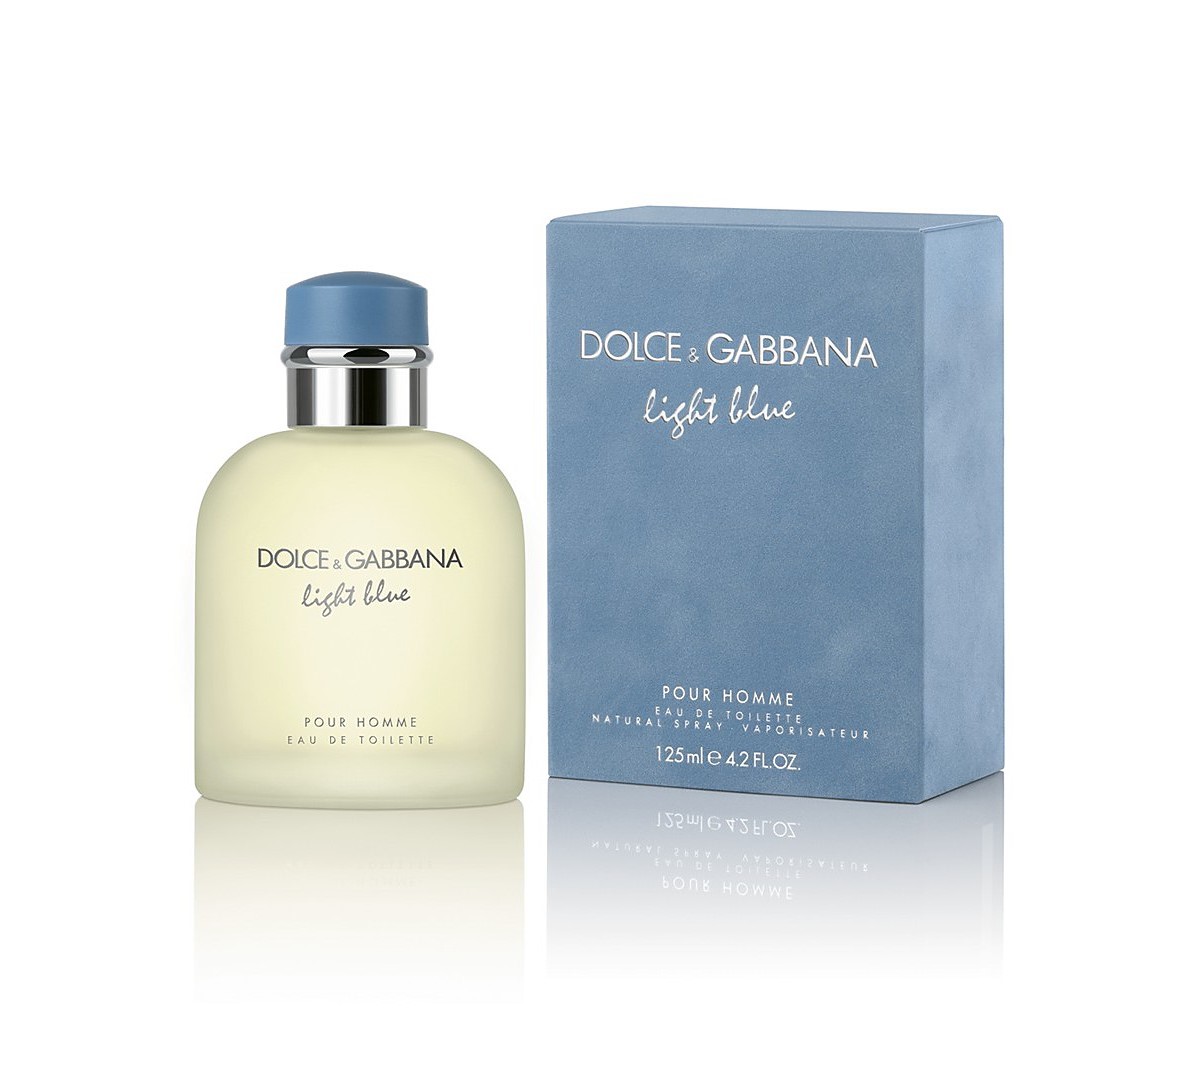 Купить Туалетная вода Dolce & Gabbana, Dolce & Gabbana Light Blue Pour Homme 125.0ml, Италия